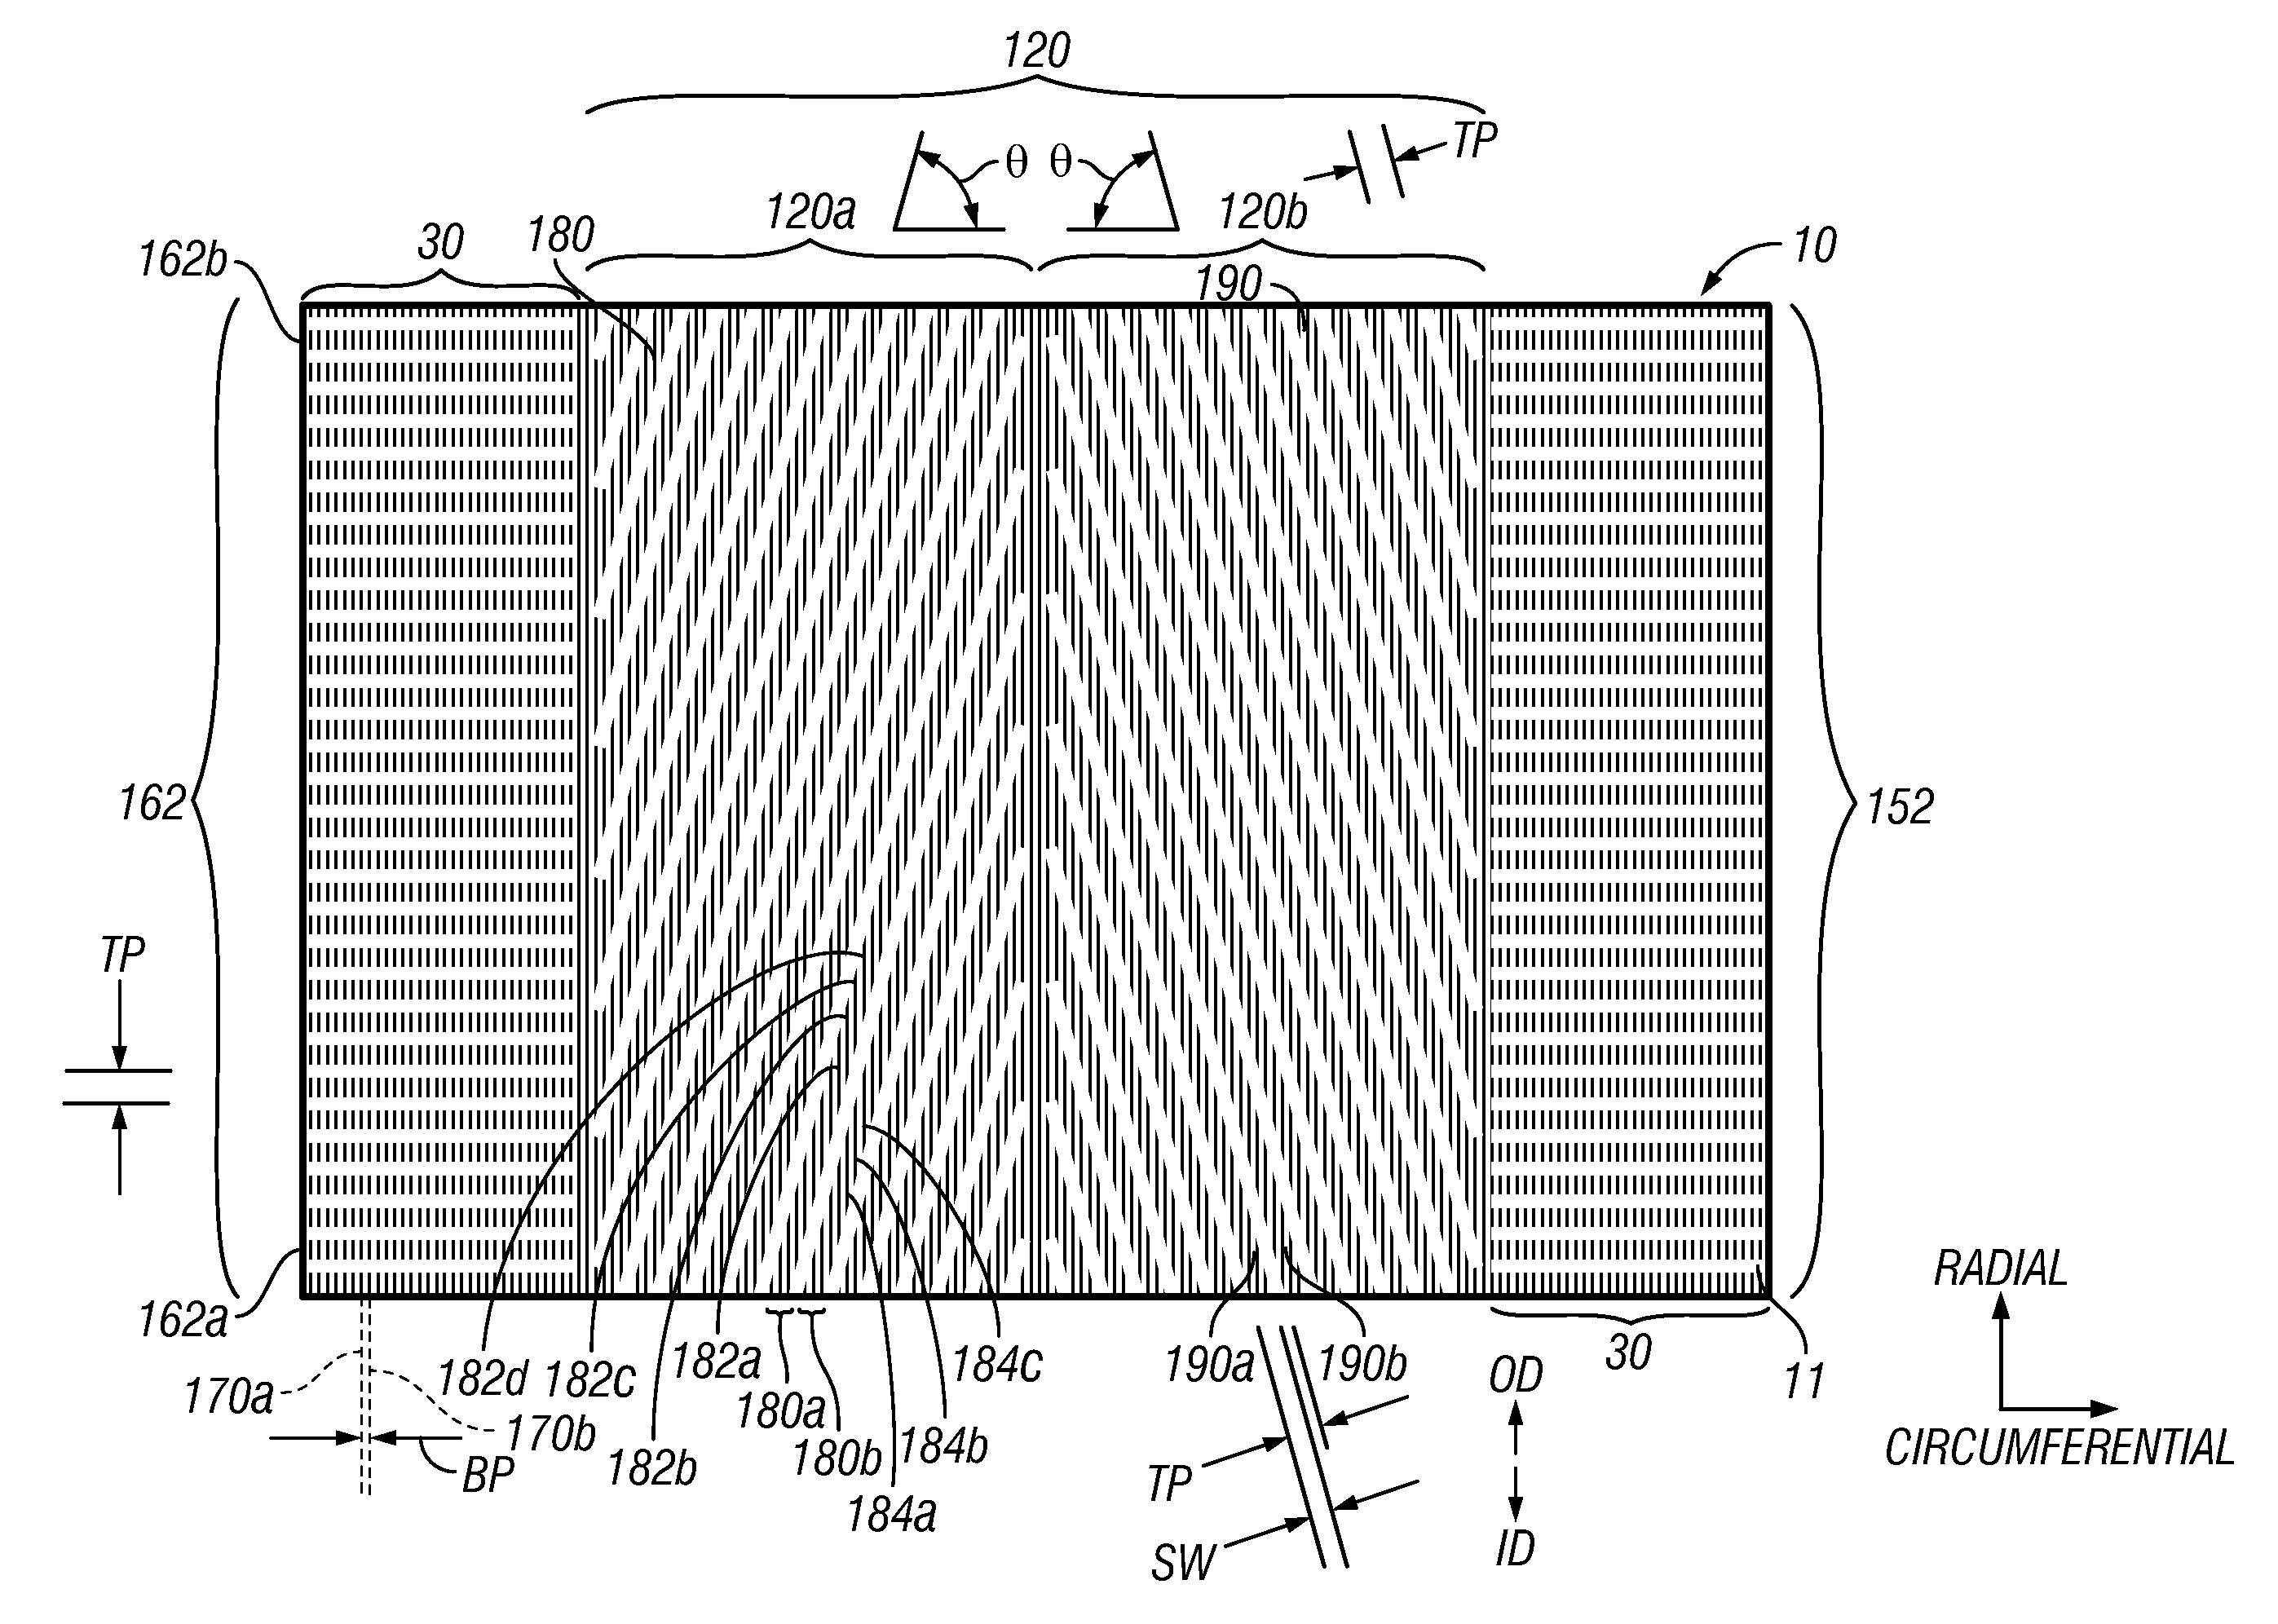 Patterned magnetic recording disk with patterned servo sectors having chevron servo patterns